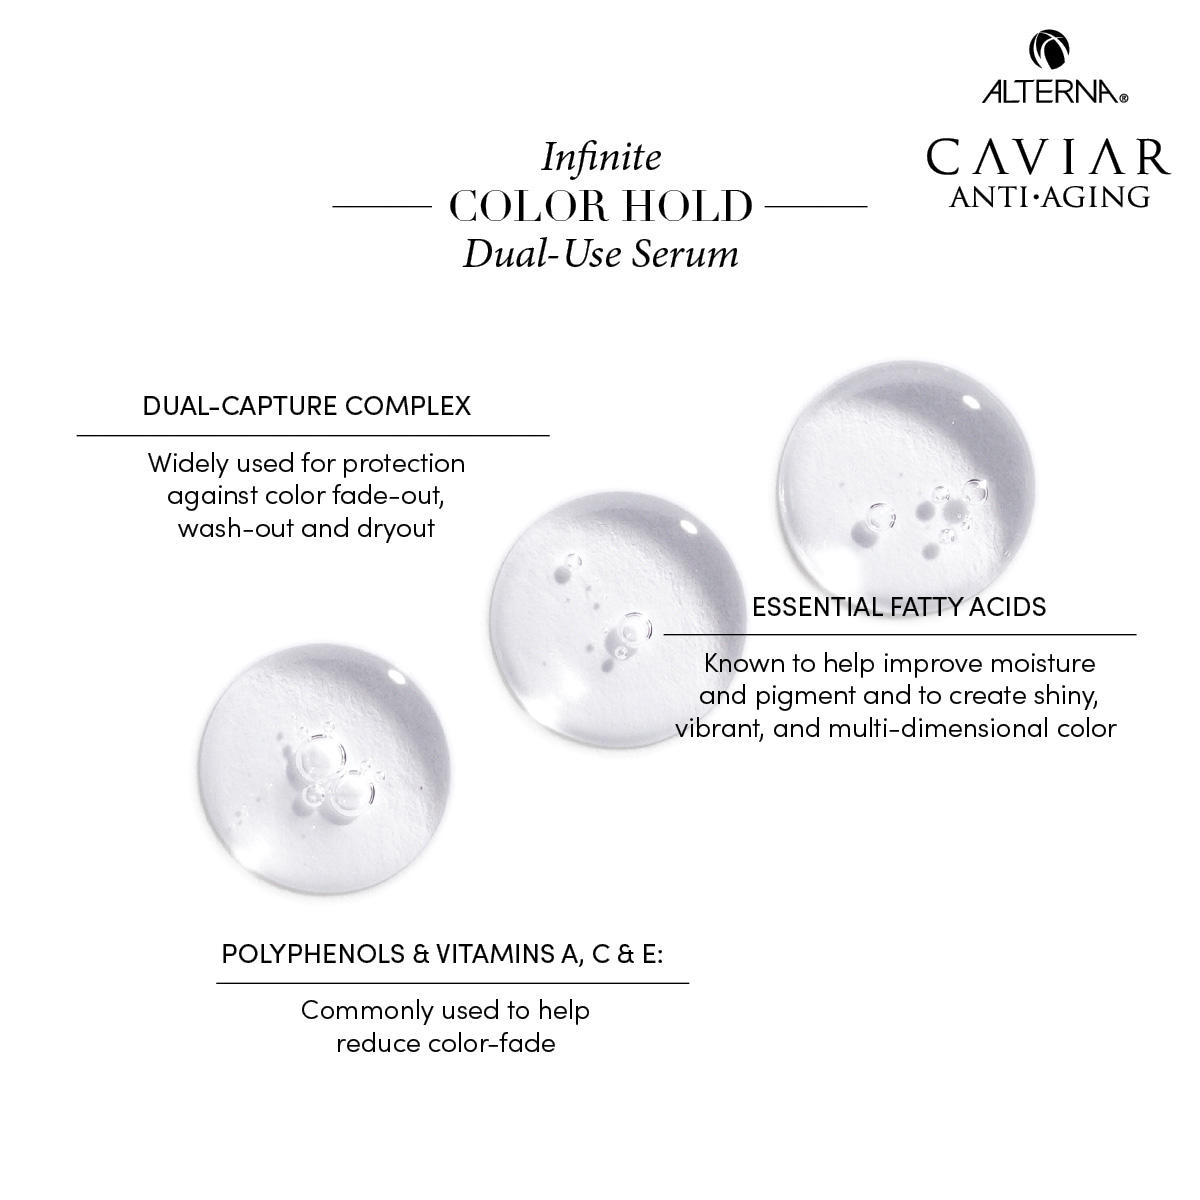 Alterna Caviar Anti-Aging Infinite Color Hold Dual-Use Serum 50 ml - 4